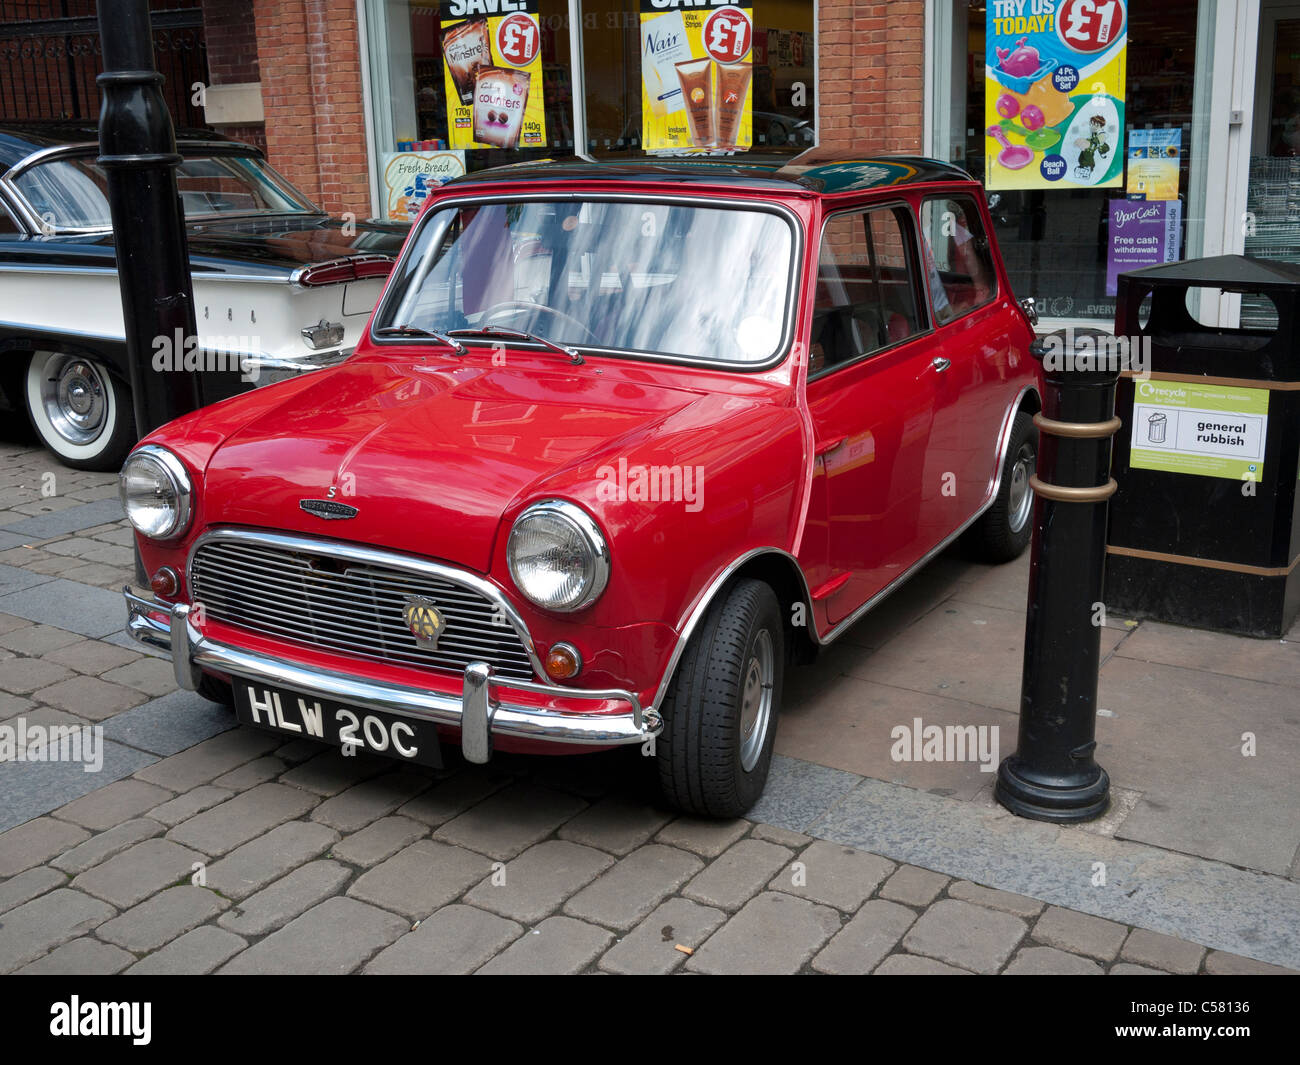 Morris Mini Cooper S. England, UK Stockfotografie - Alamy